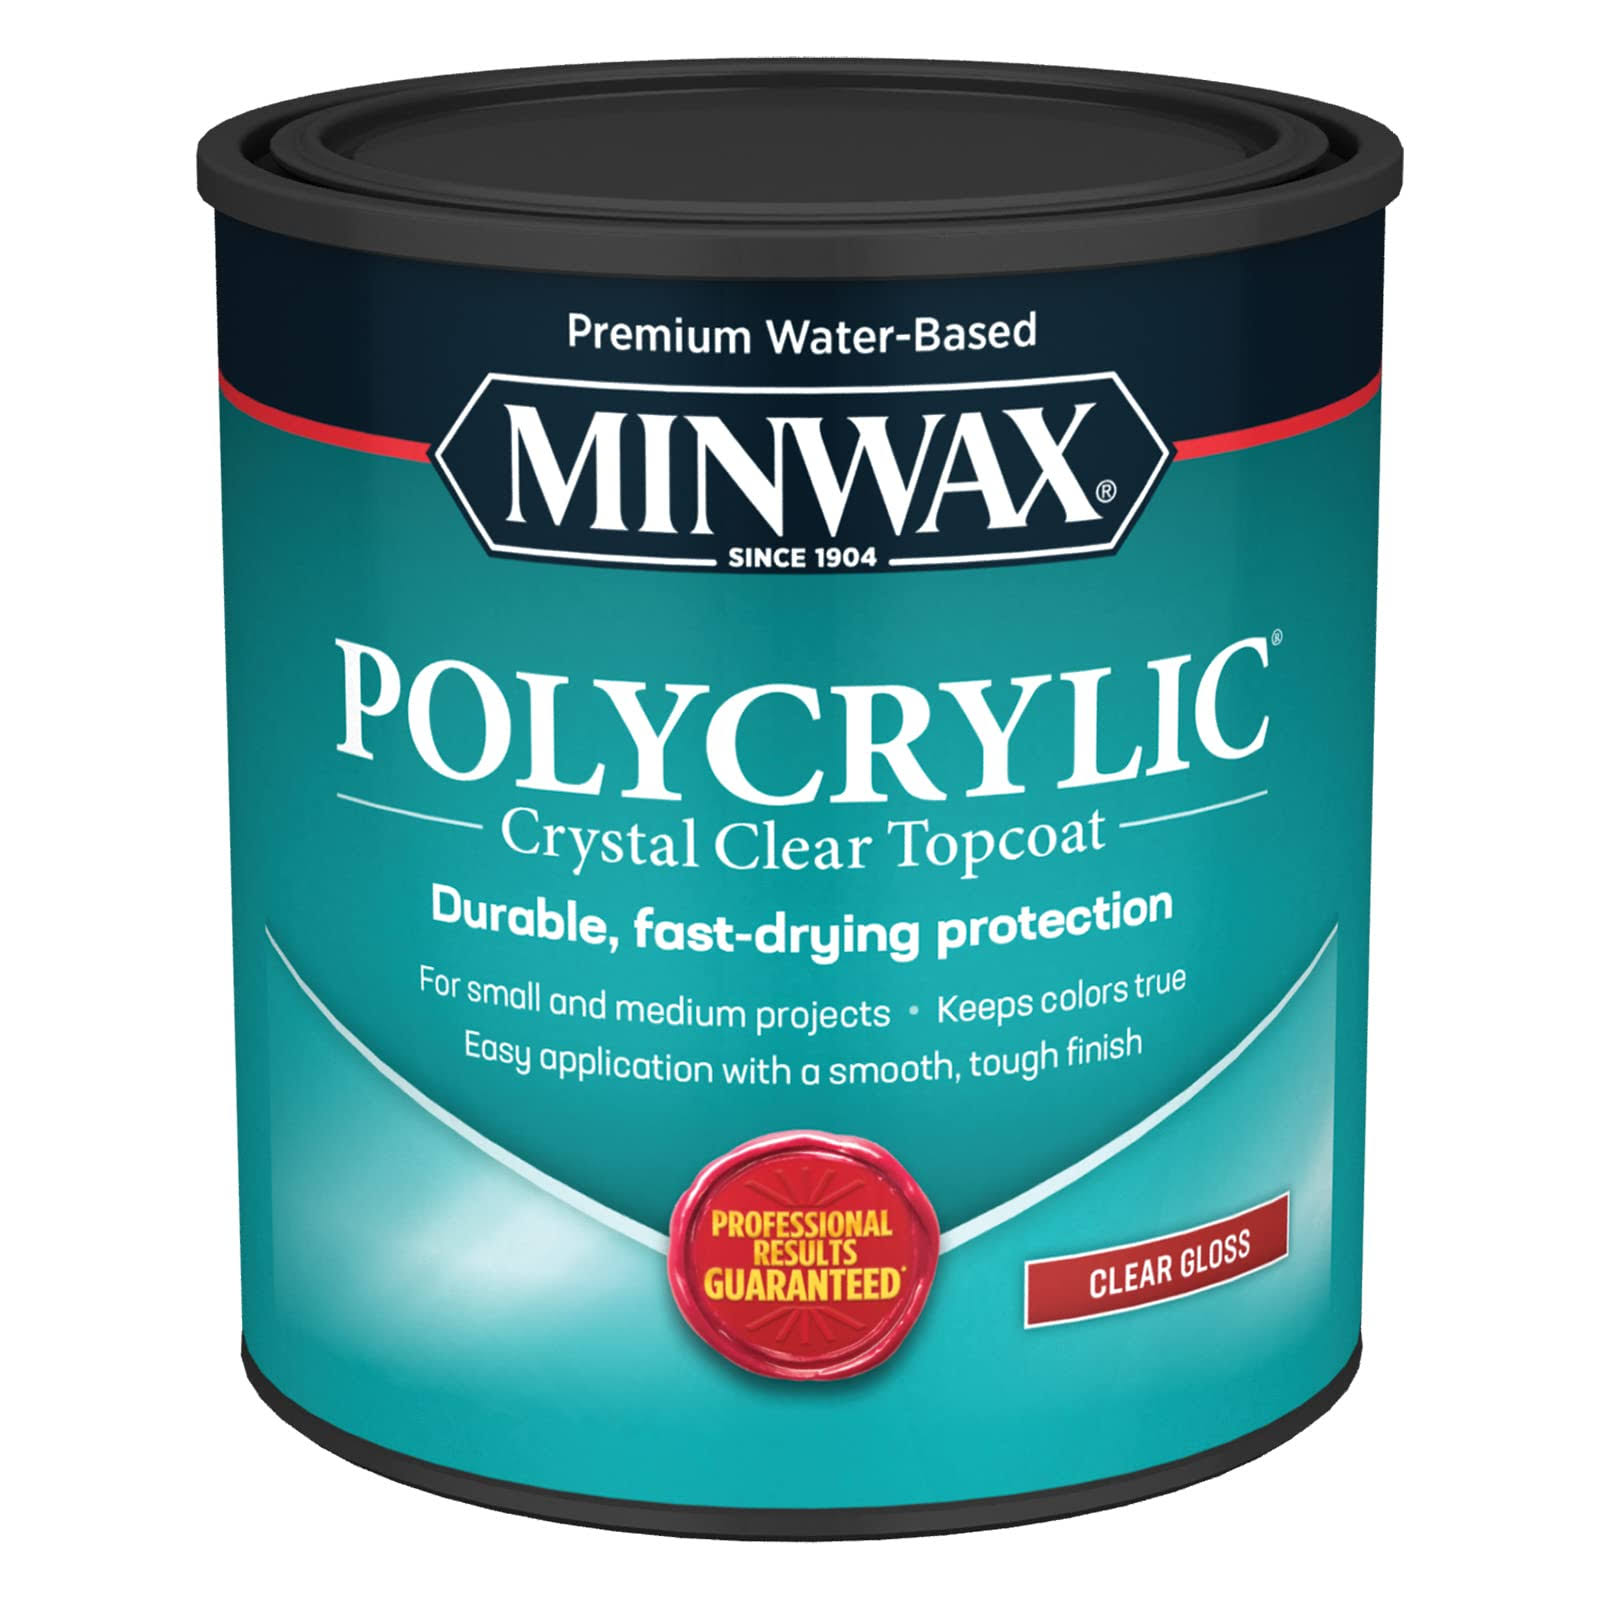 Minwax Polycrylic Protective Finish - Clear Gloss, 946ml